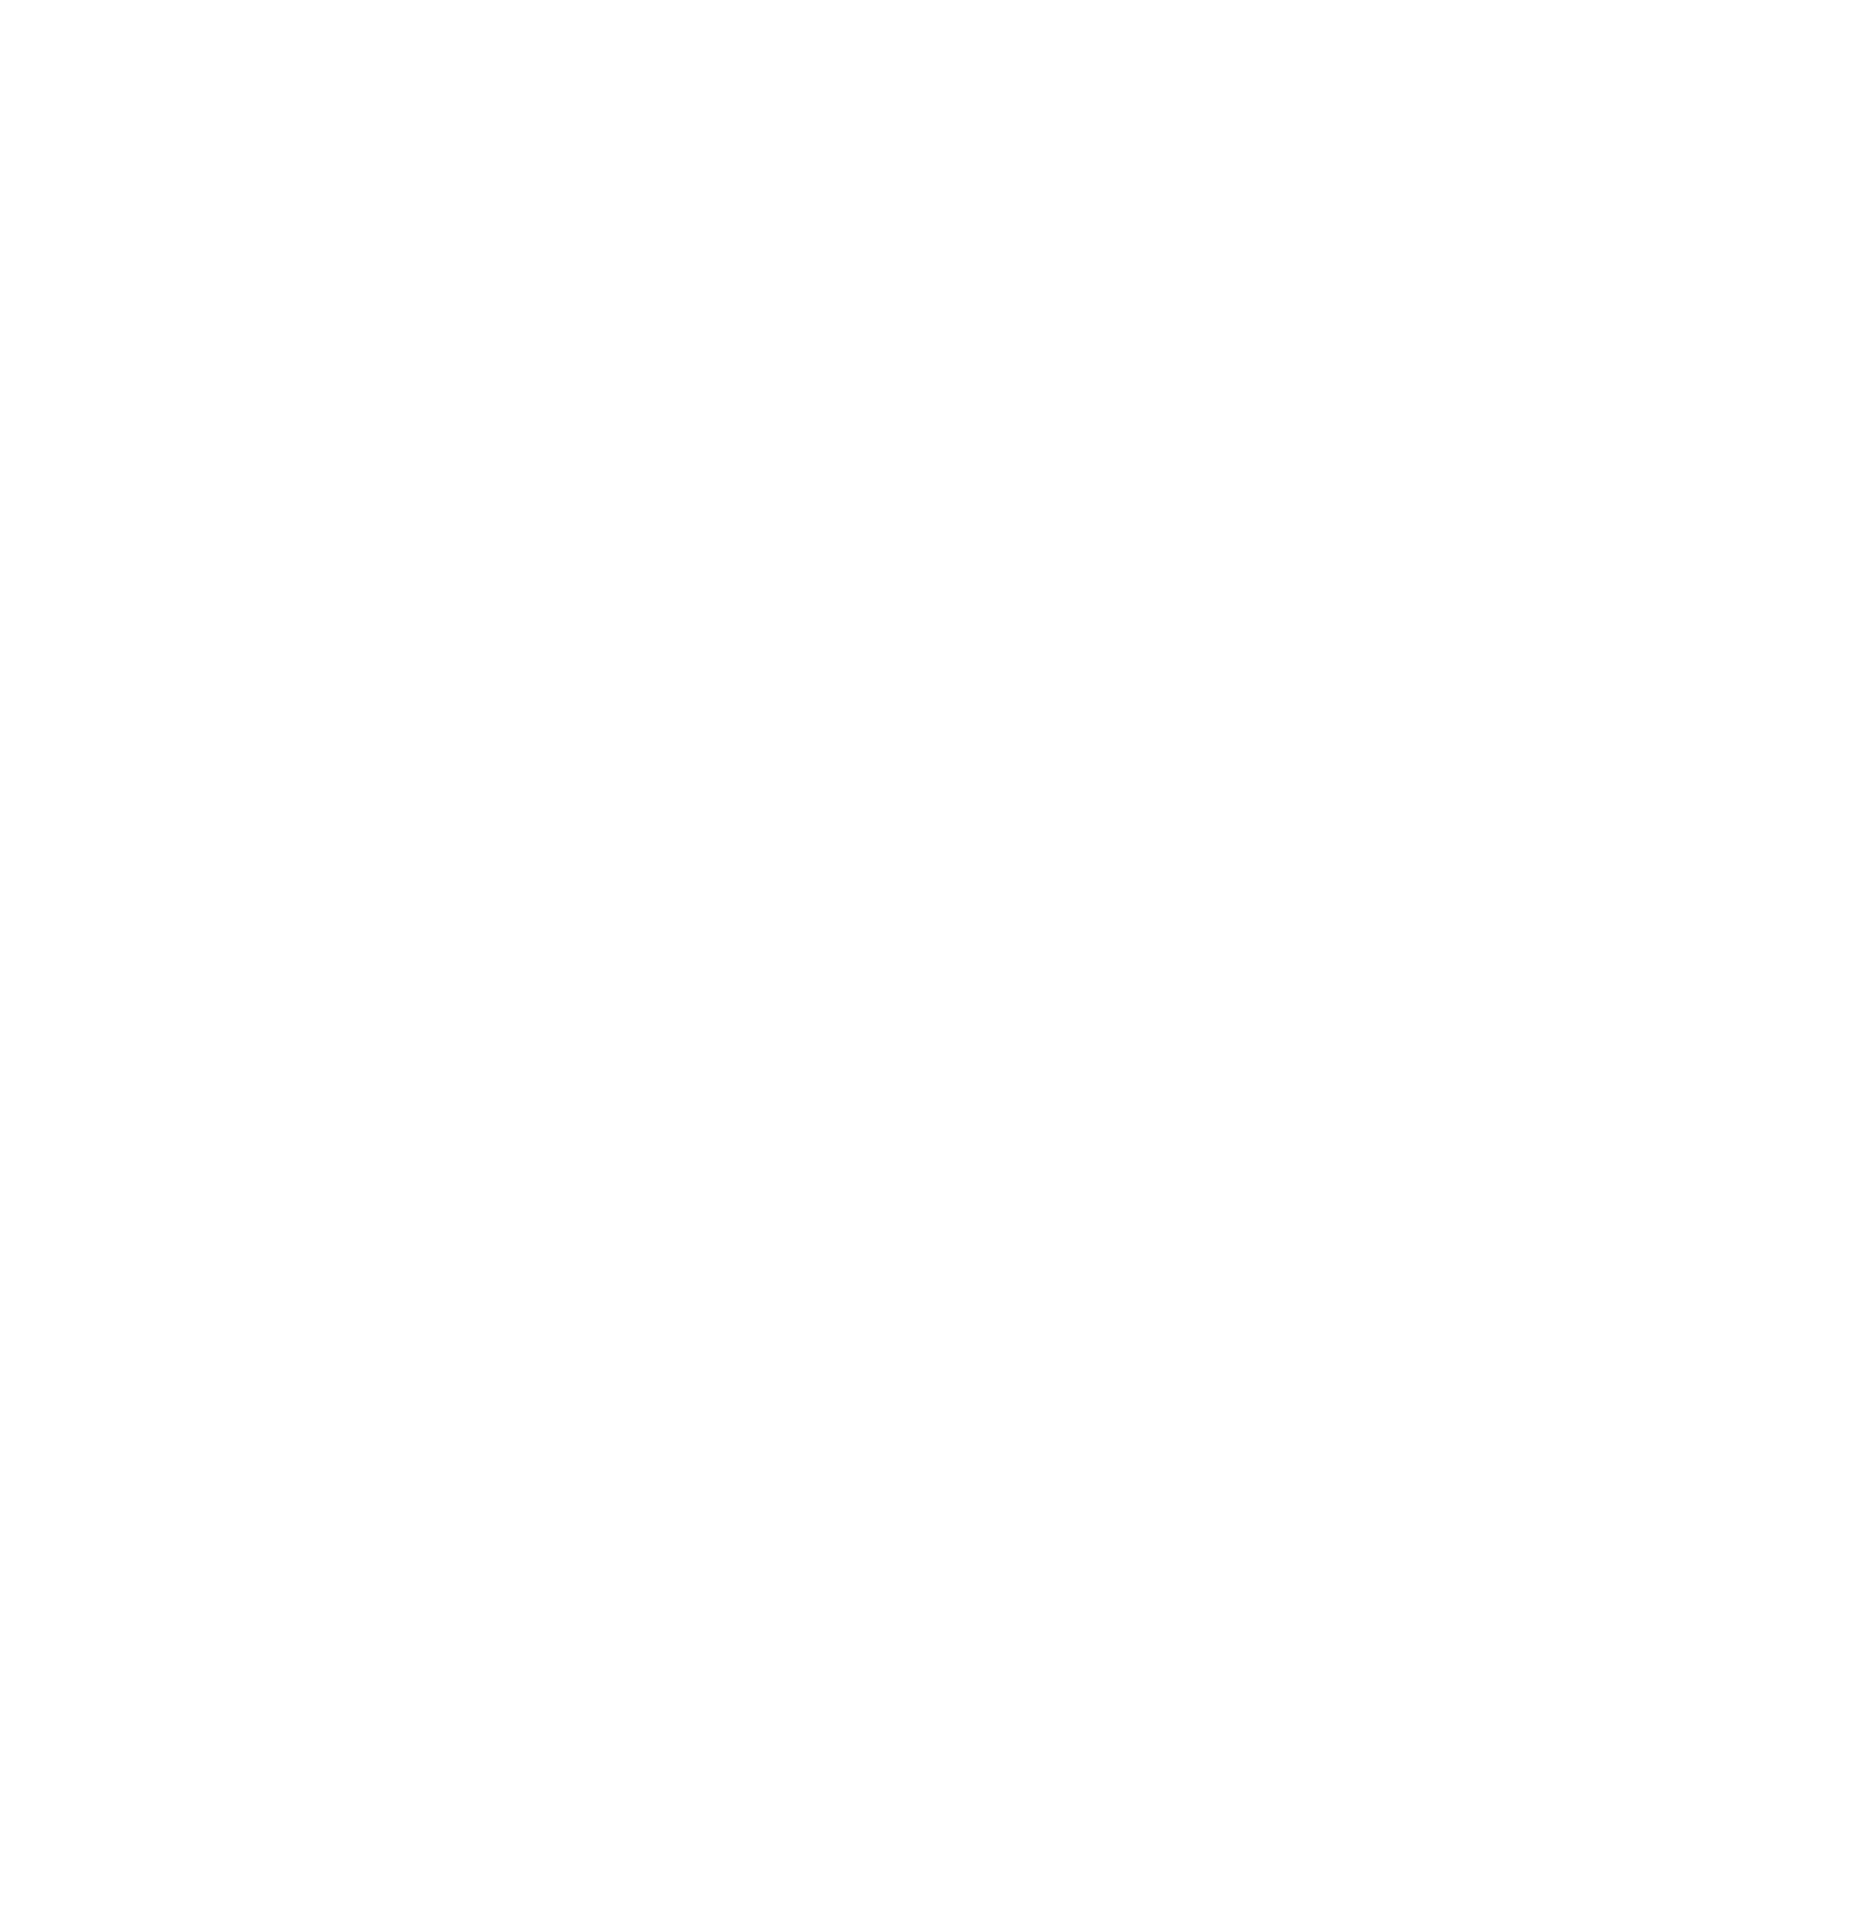 Legacies of Enslavement and Dispossession at UD